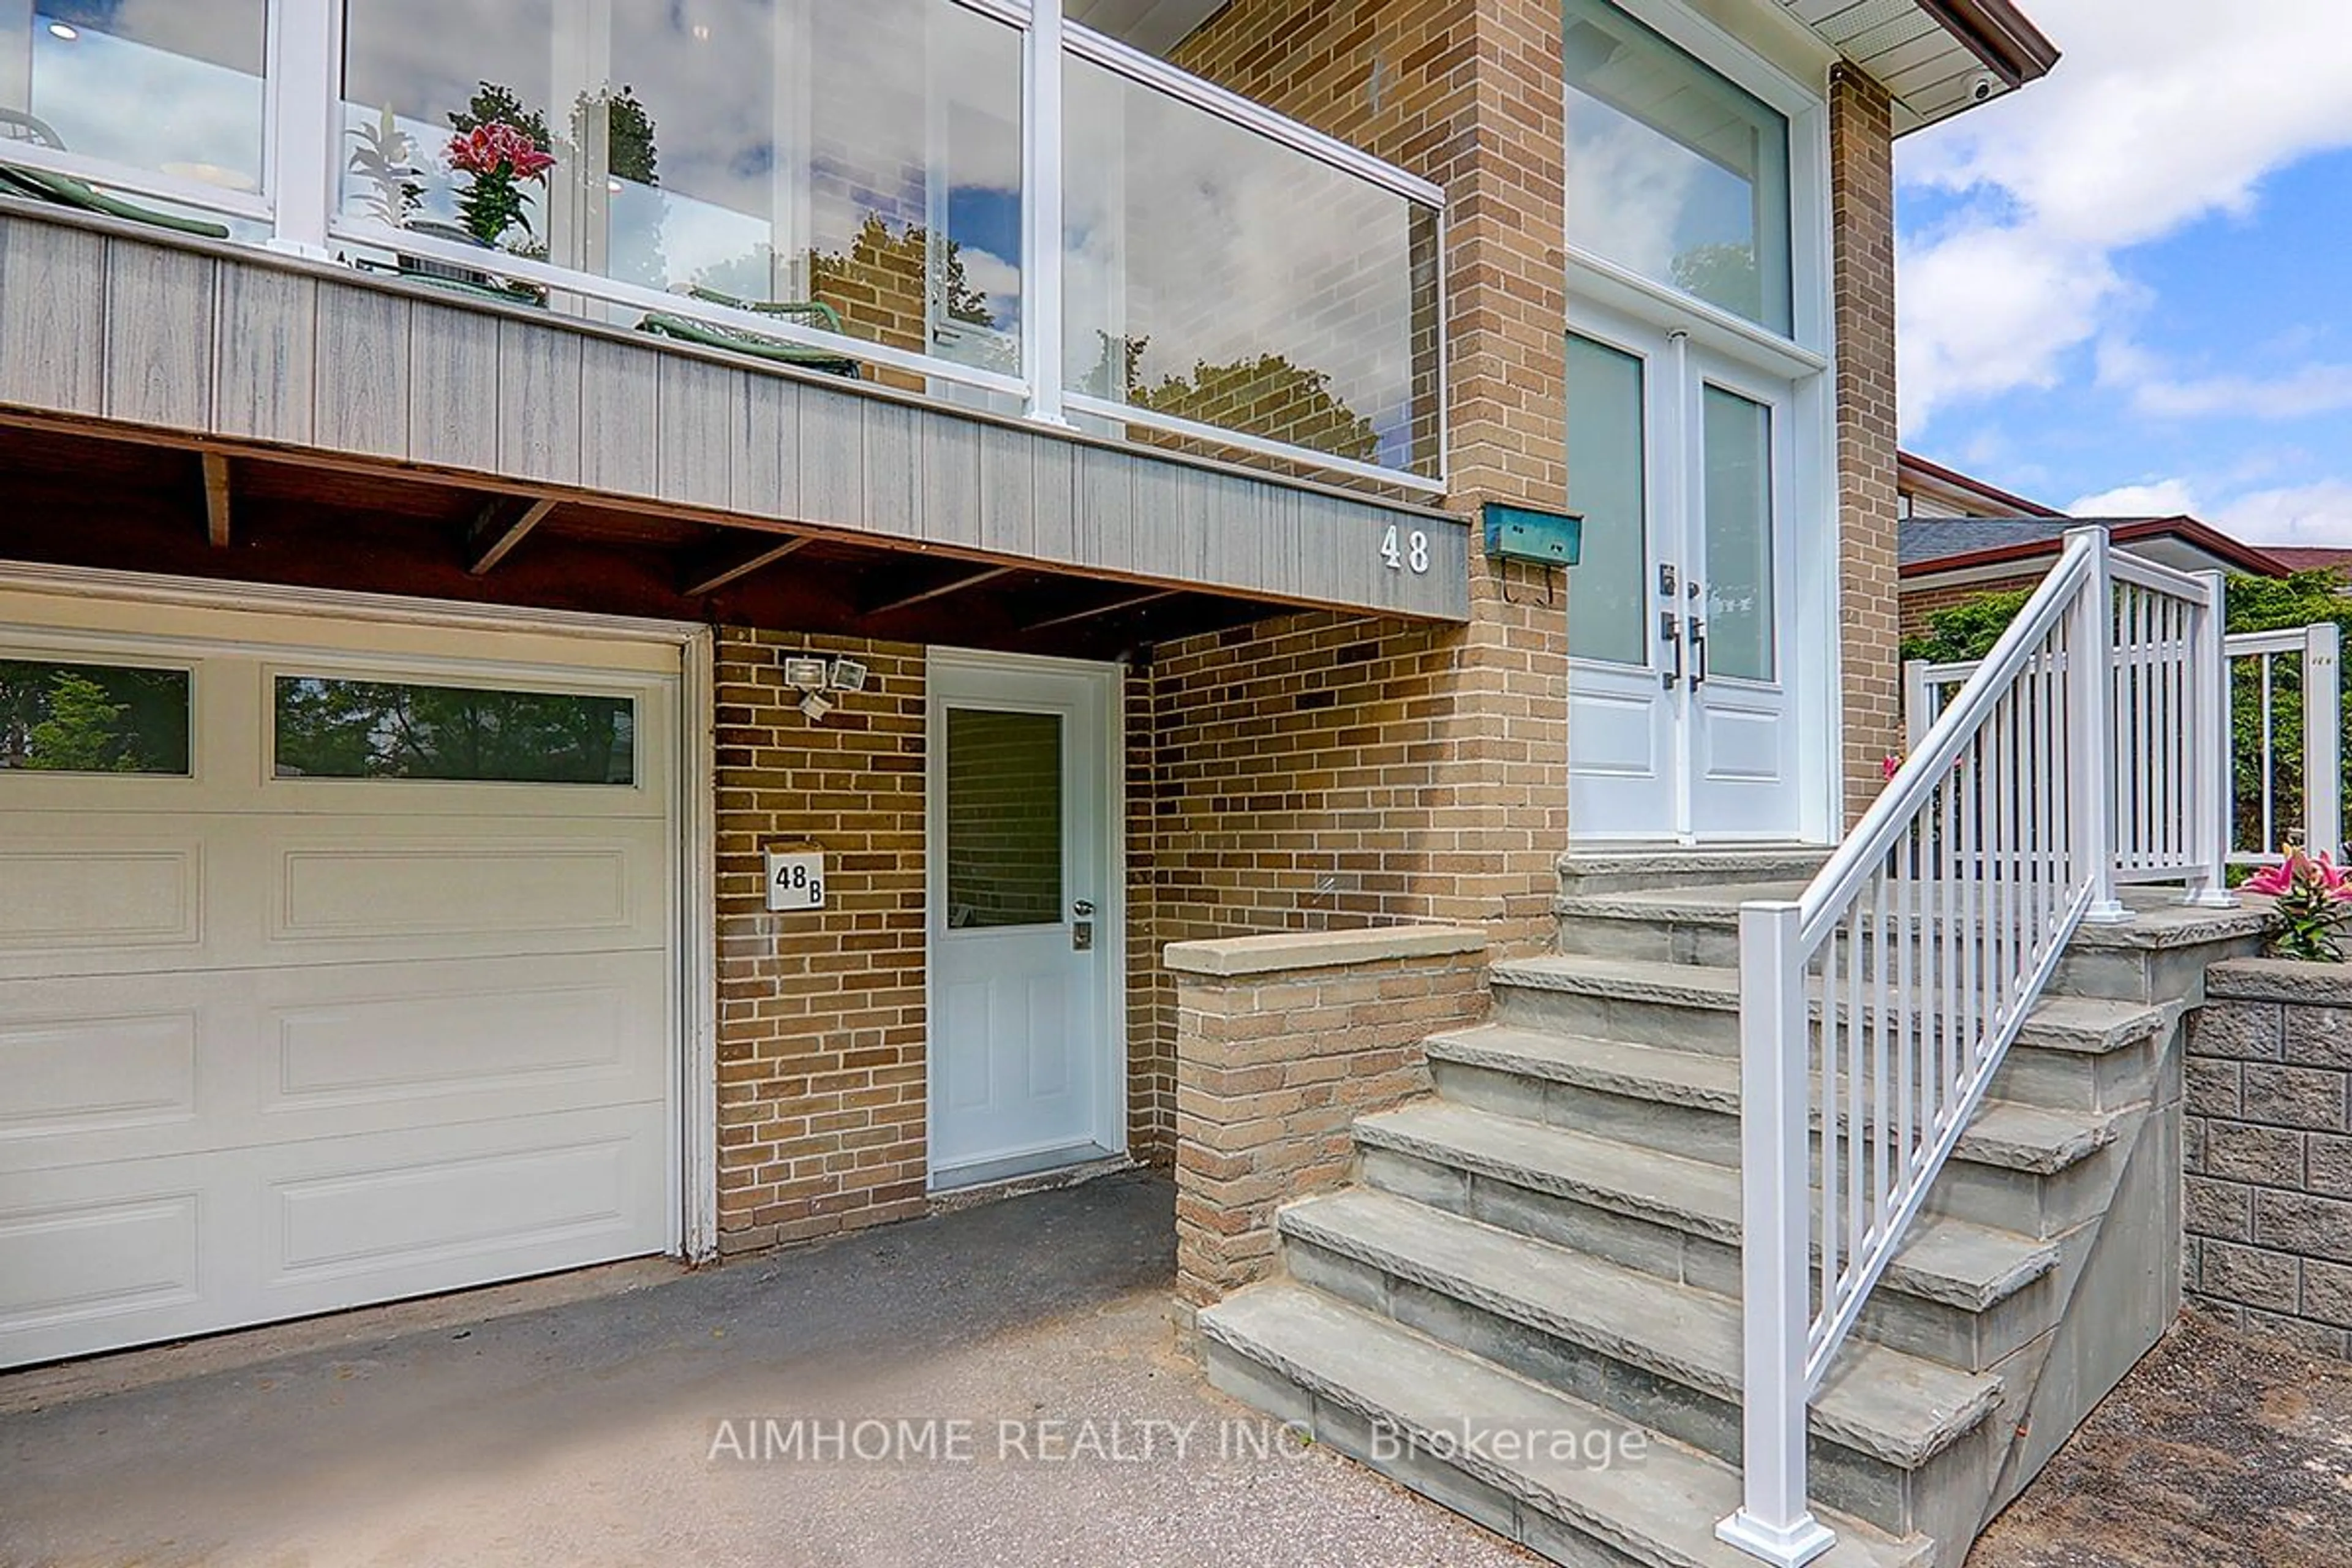 Home with brick exterior material for 48 Brigadoon Cres, Toronto Ontario M1T 3C1